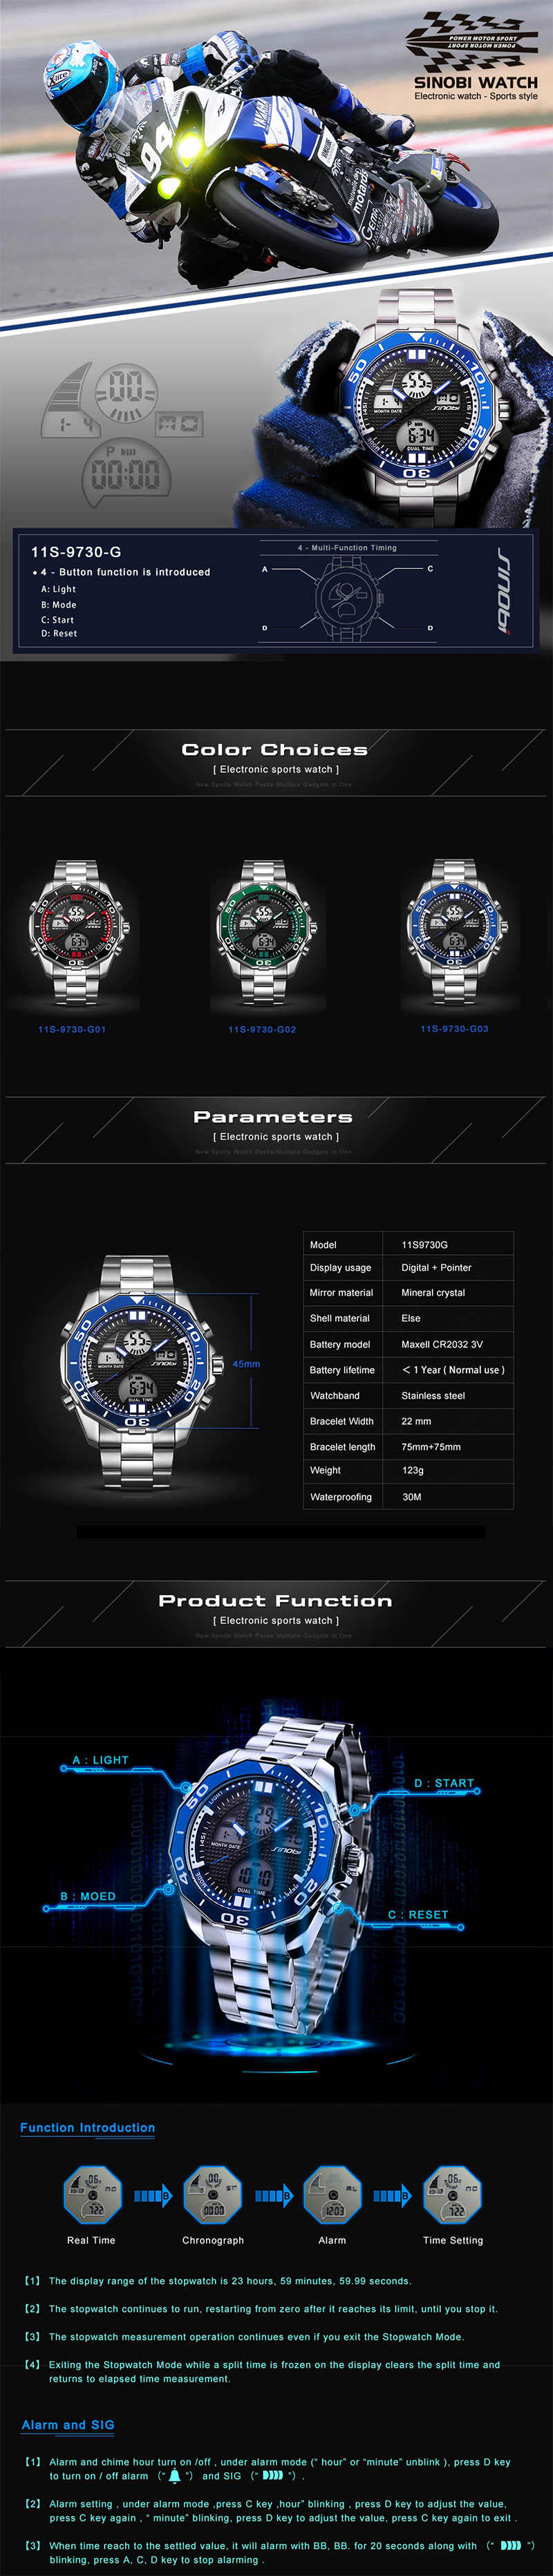 SINOBI-9730-Dual-Display-Digital-Watch-Stainless-Steel-Strap-Men-Luminous-Display-Sport-Watch-1293544